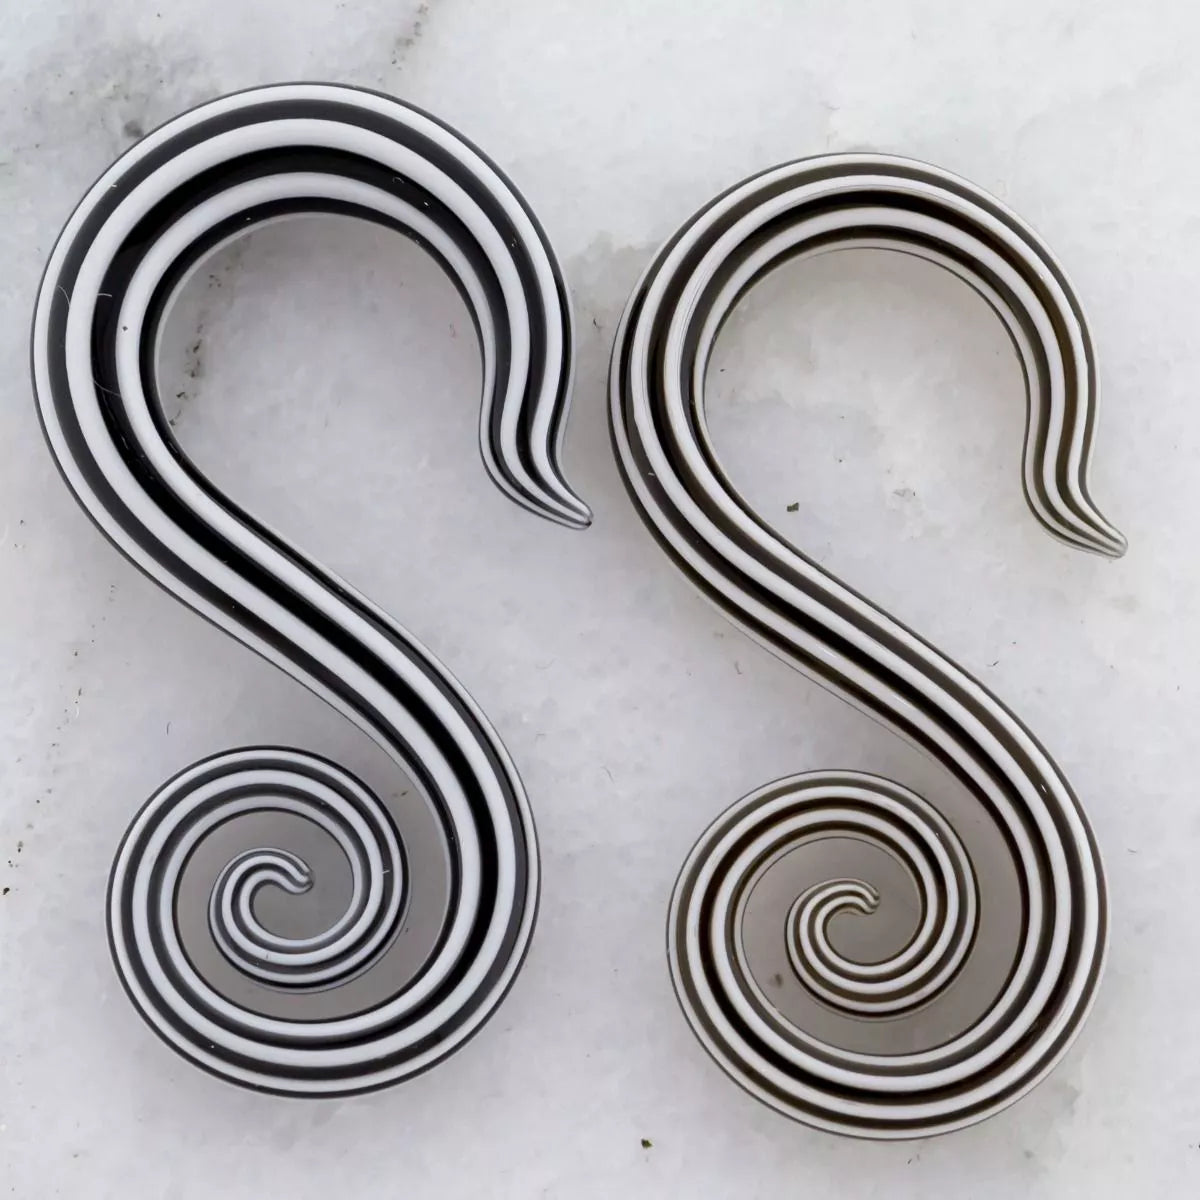 Tapers - Spirals Borosilicate Glass Black And White Striped Seahorse - 1 Piece #SPLT#2 -Rebel Bod-RebelBod